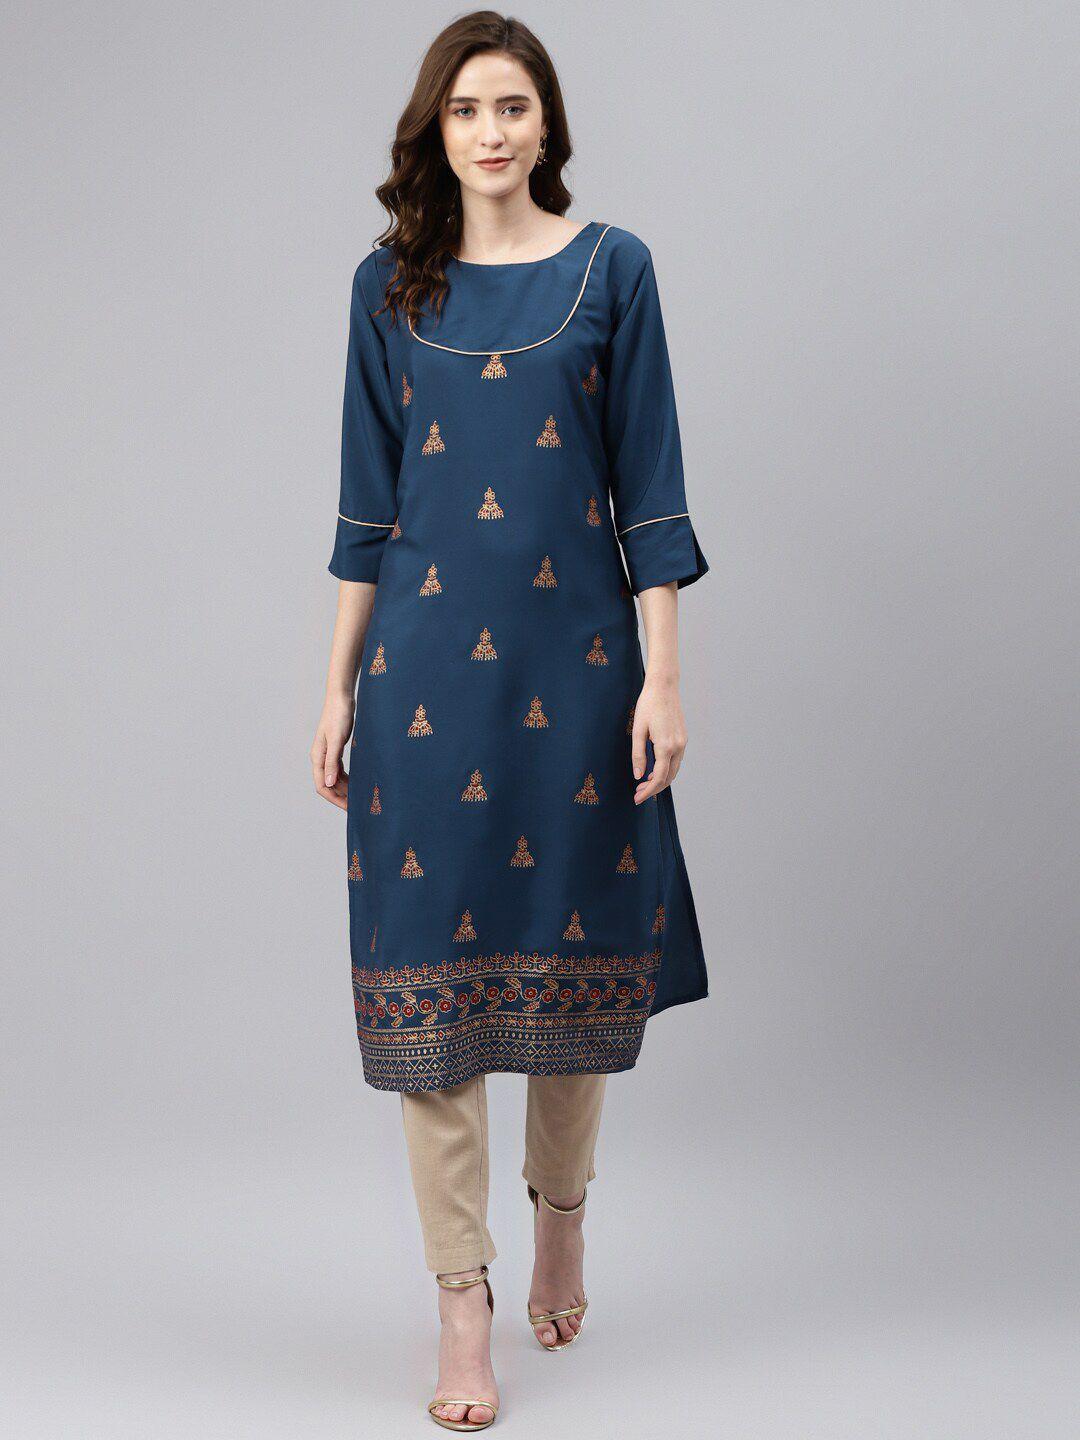 somras women blue ethnic motifs printed kurta